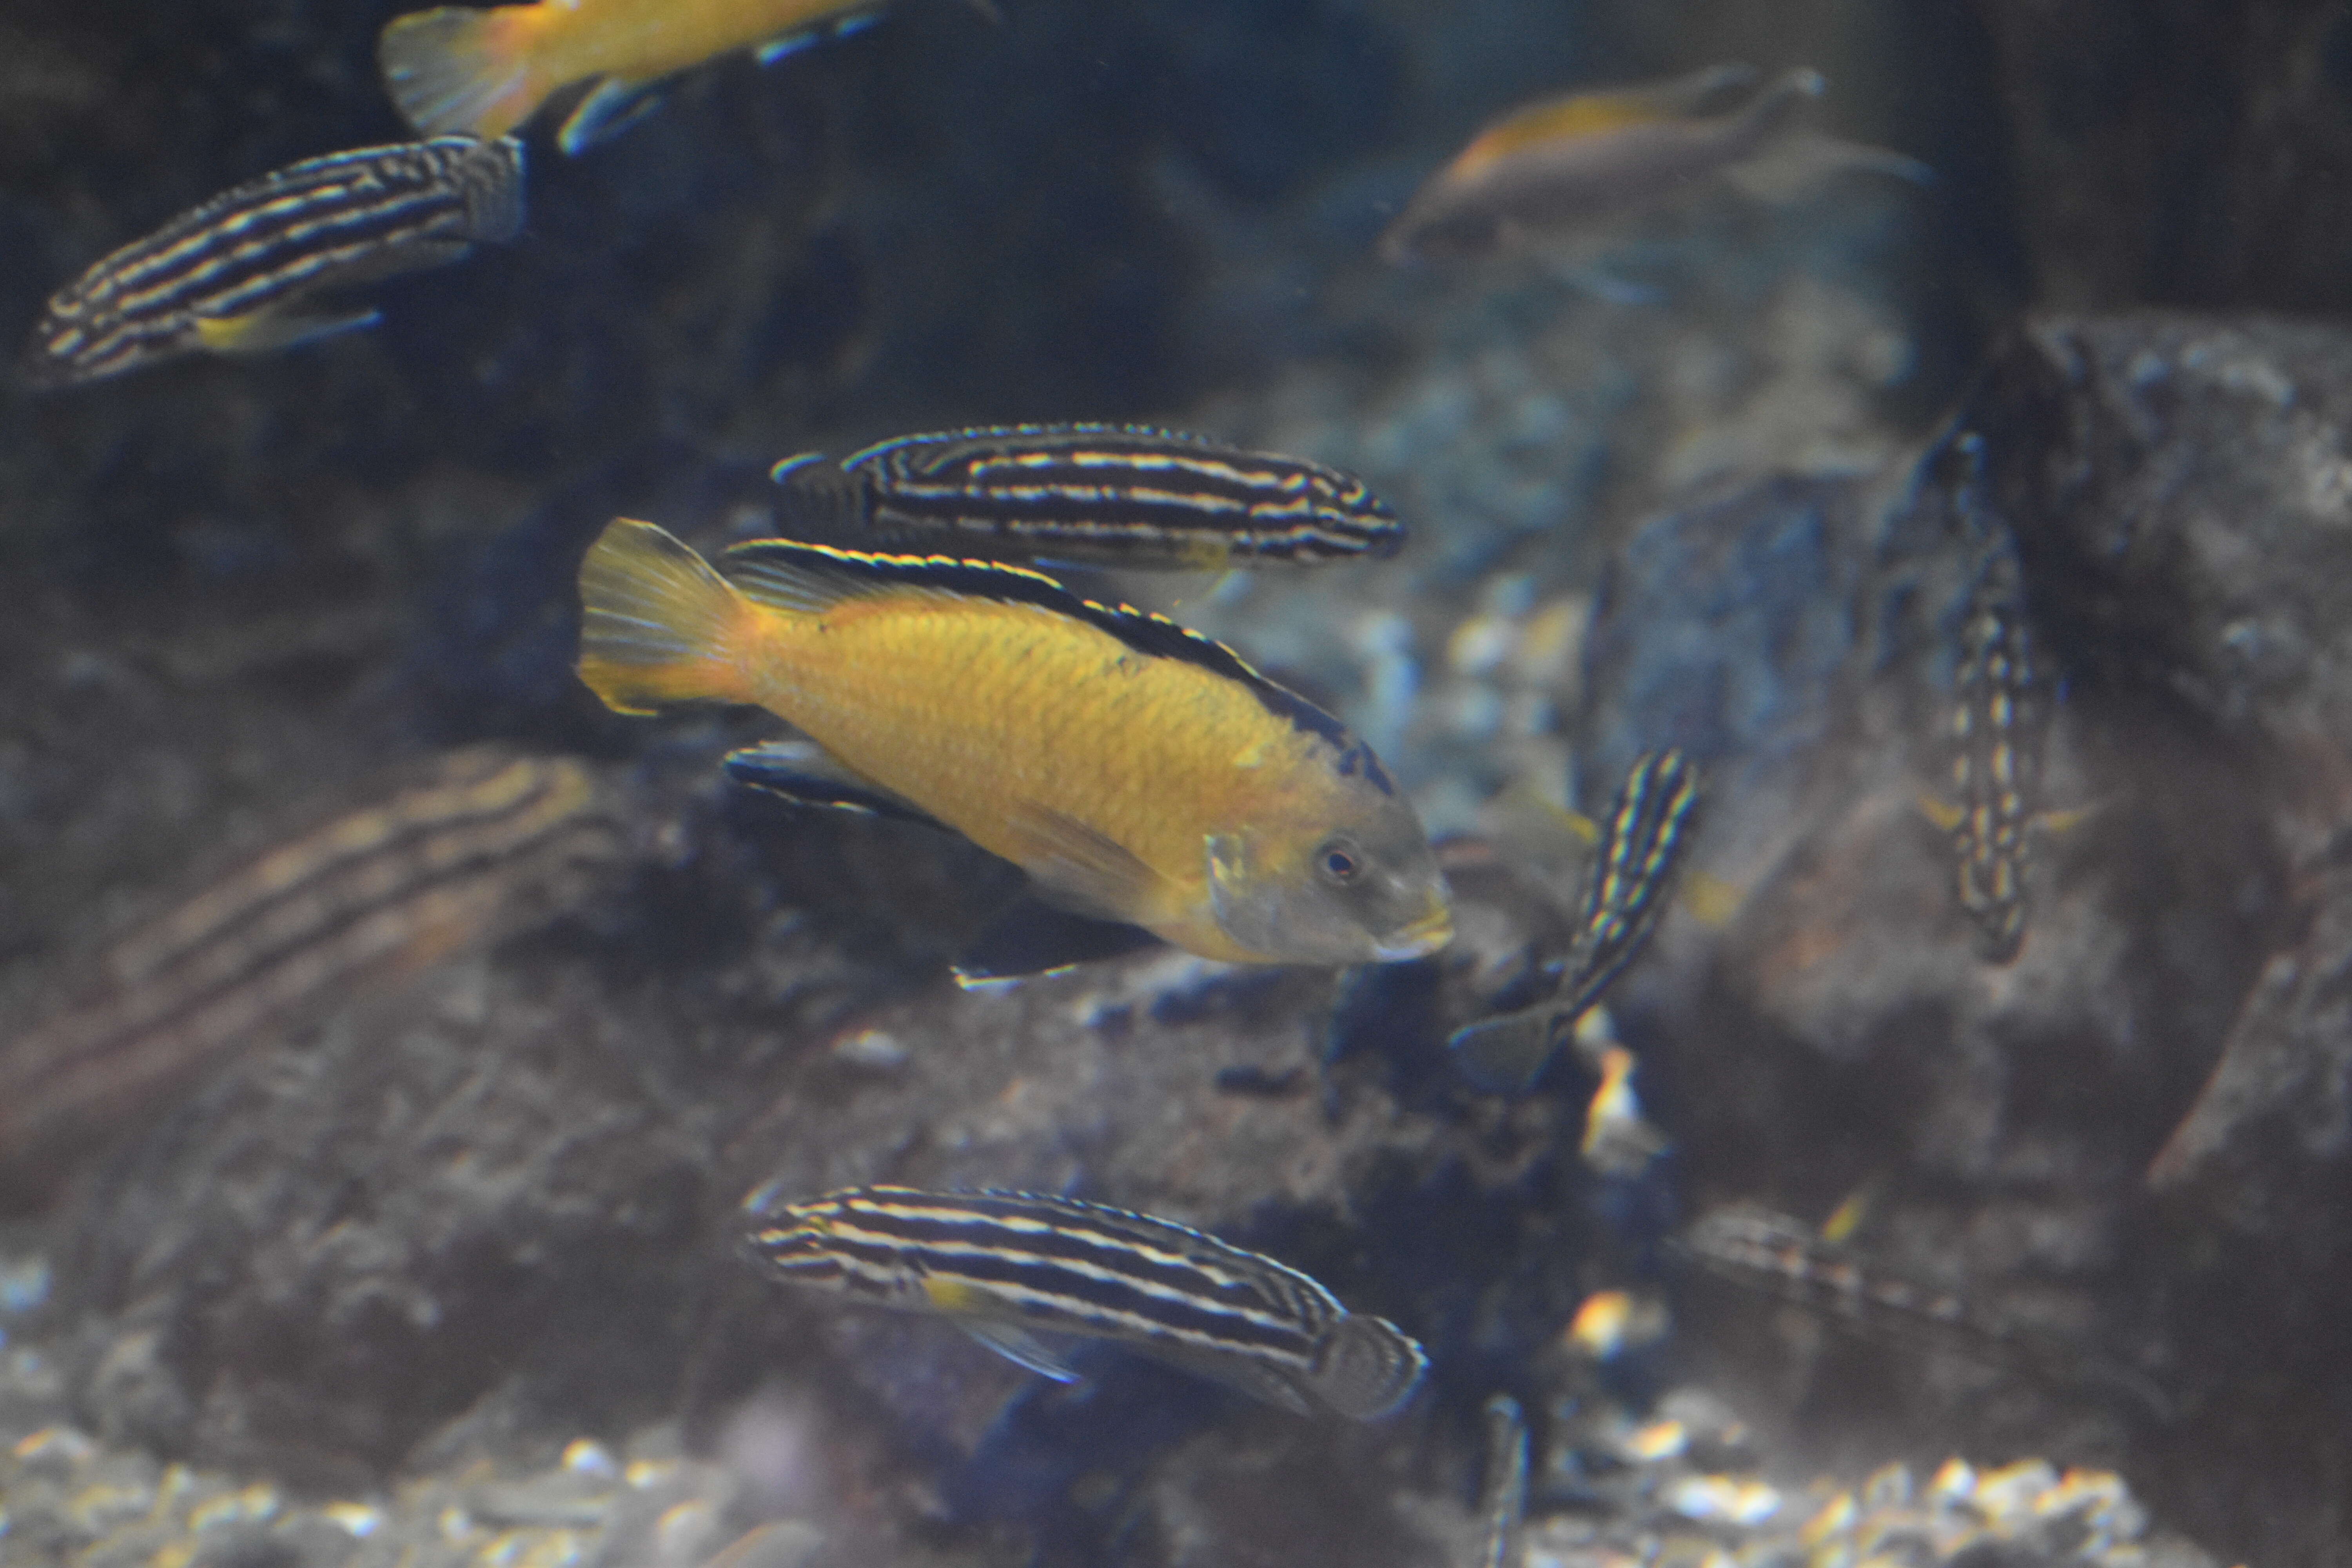 Image of Julidochromis